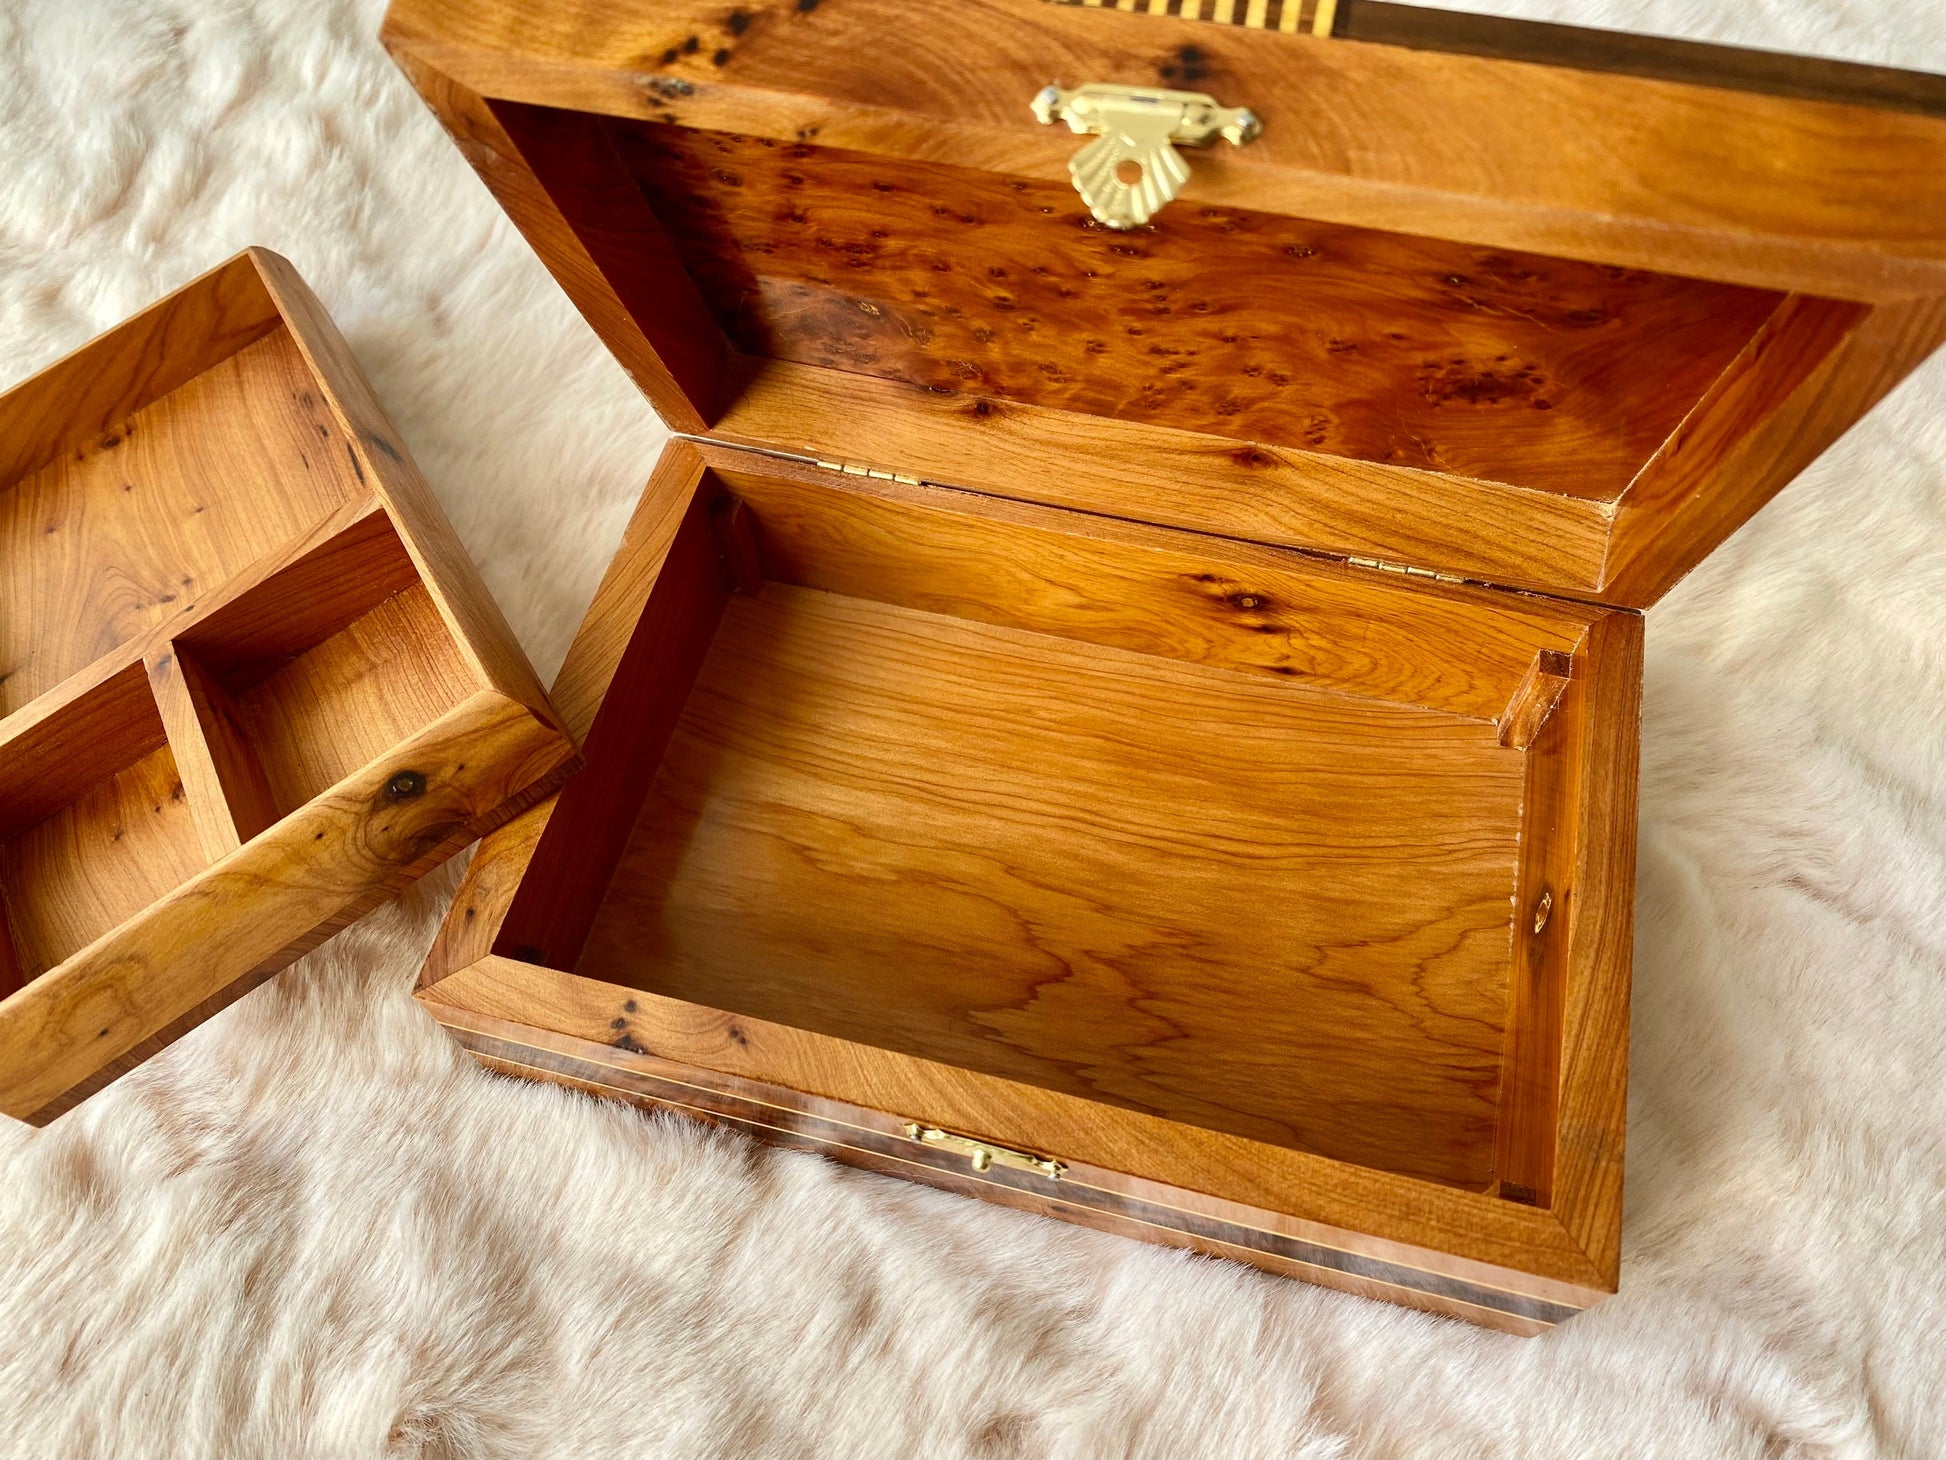 7"x5" Moroccan jewellery Box,large lockable thuya wooden burl Jewelry Box organizer with key,Christmas Couples gift,wedding wood memory box